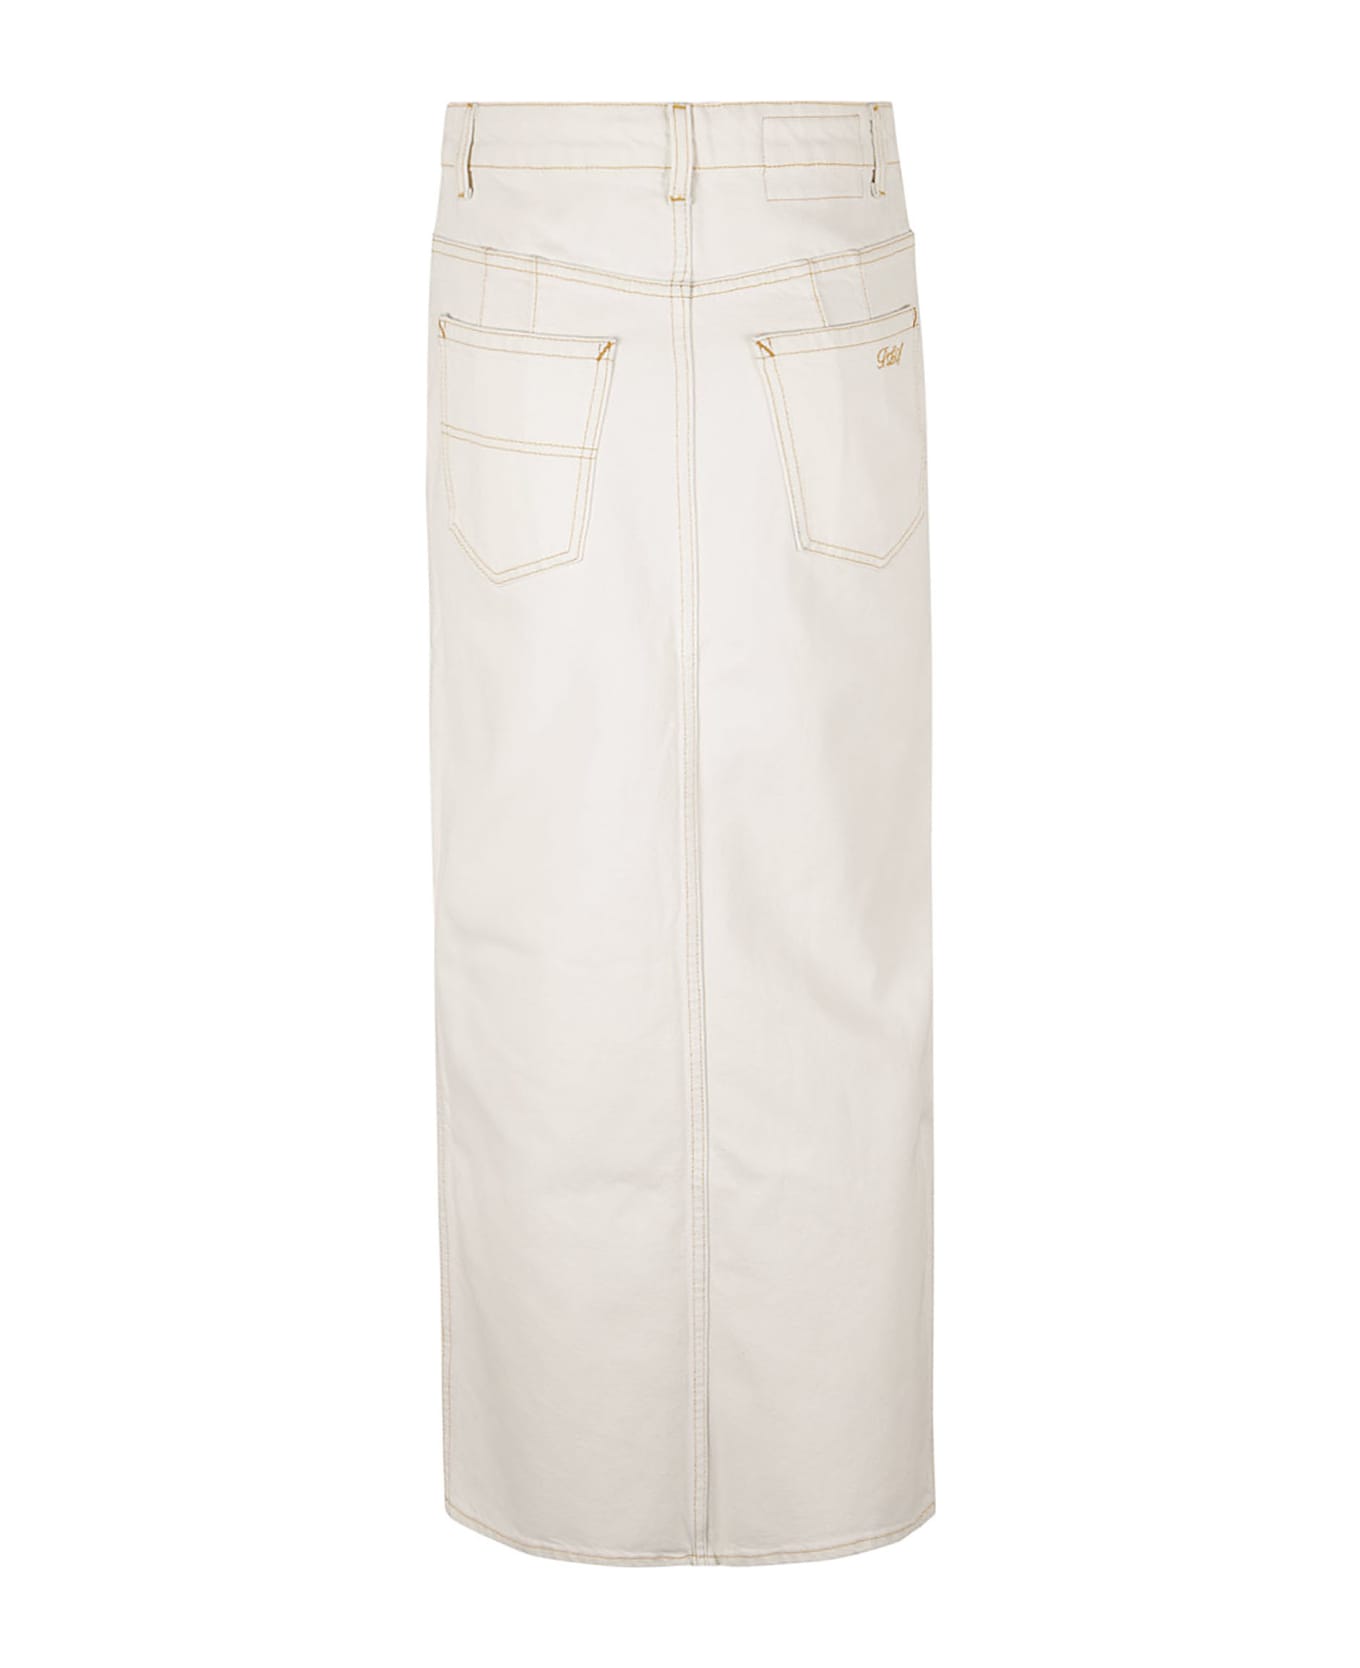 Philosophy di Lorenzo Serafini Front Slit 5 Pockets Denim Skirt - White